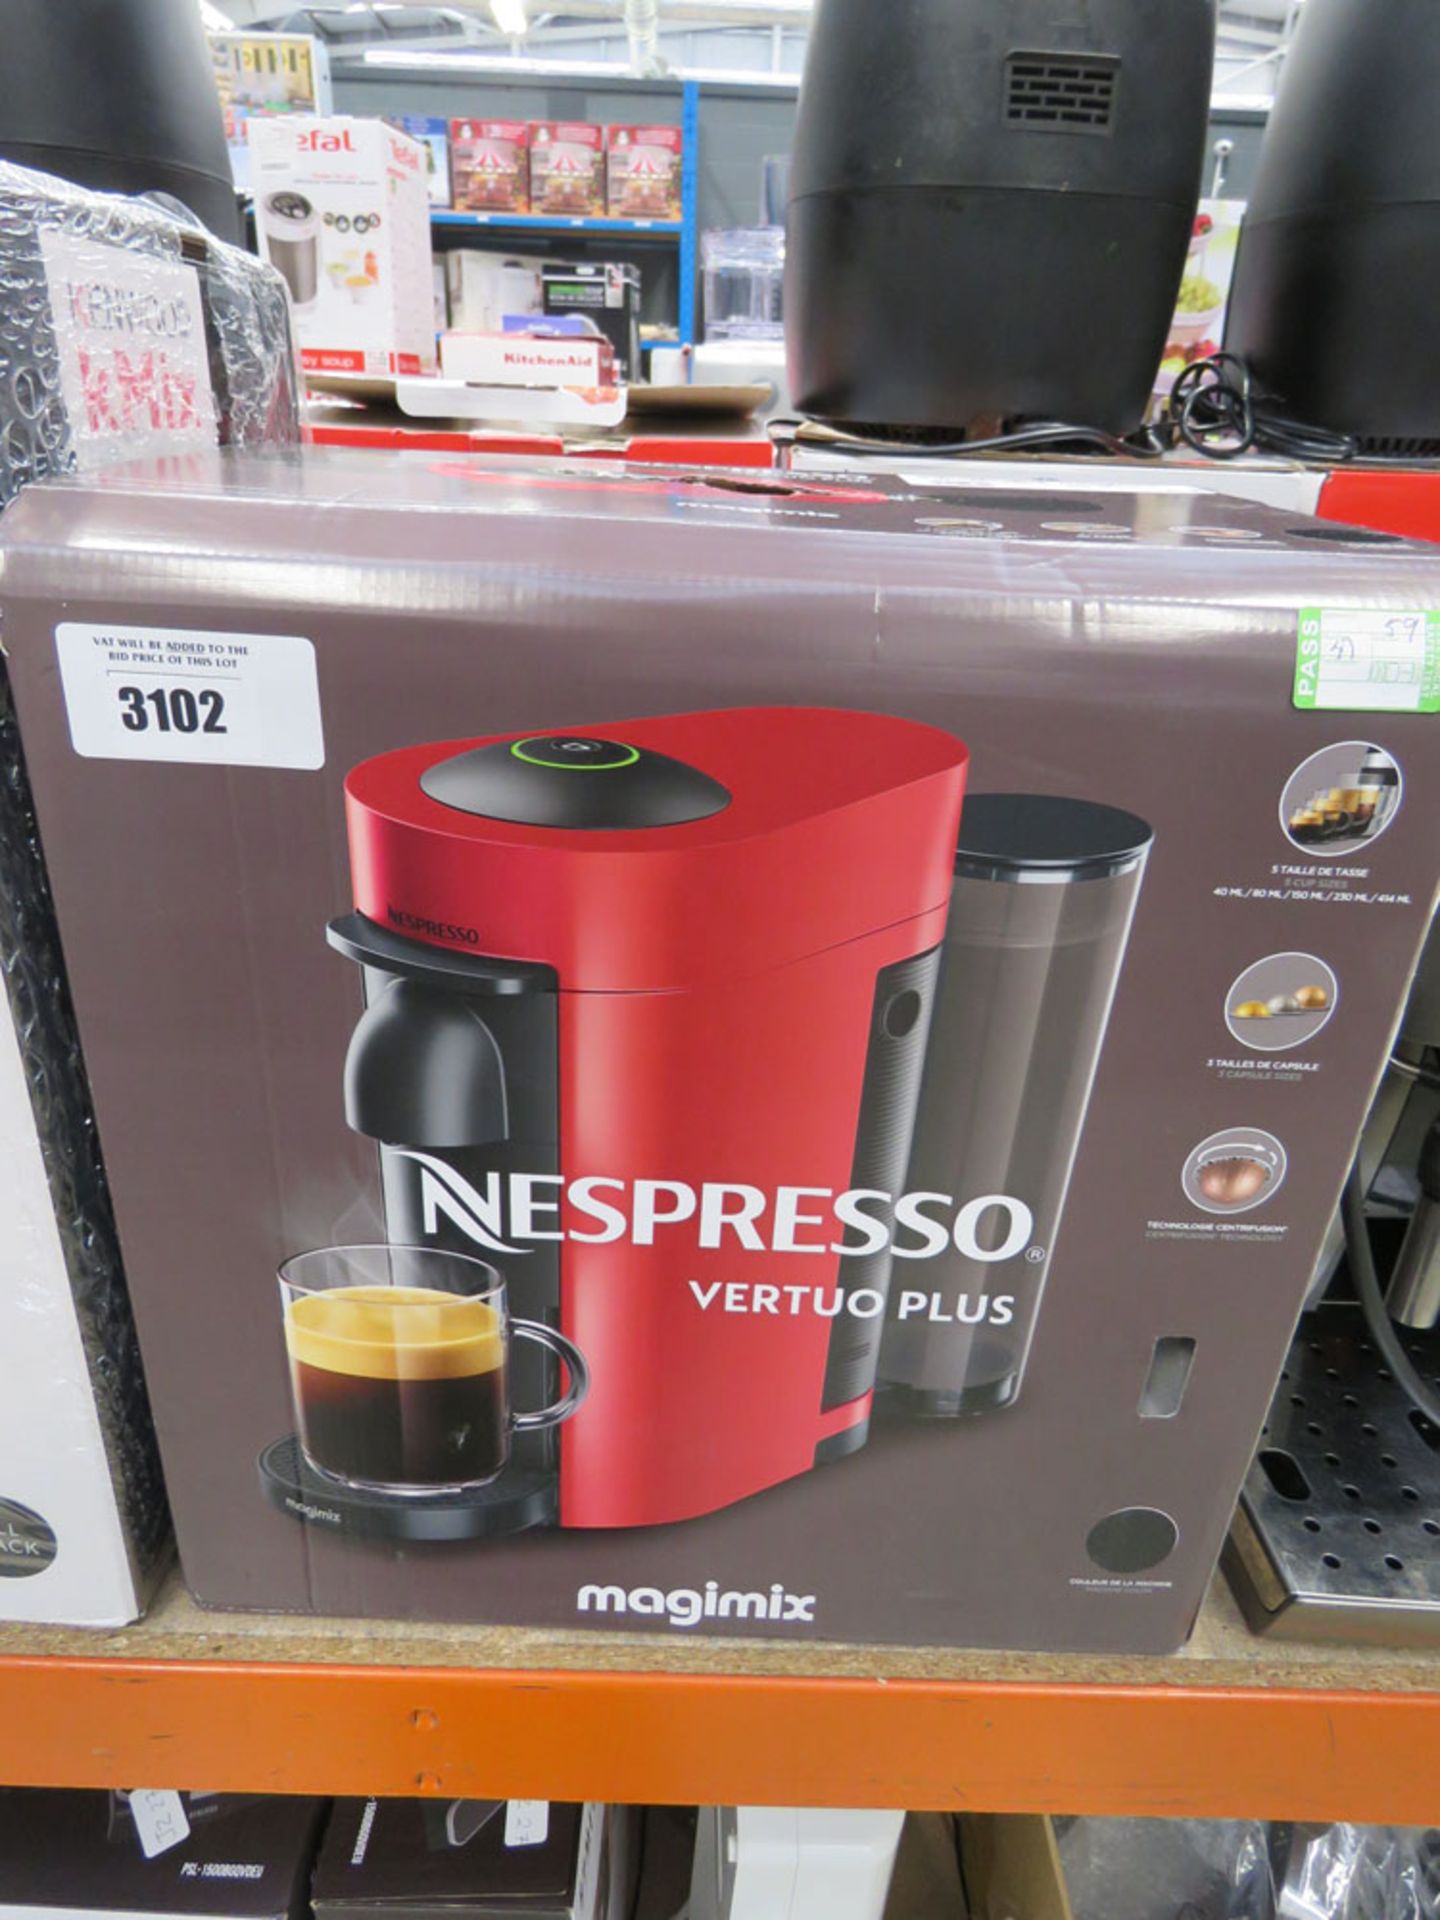 (TN59) Nespresso Virtue Plus Magimix coffee machine with box - Image 2 of 2